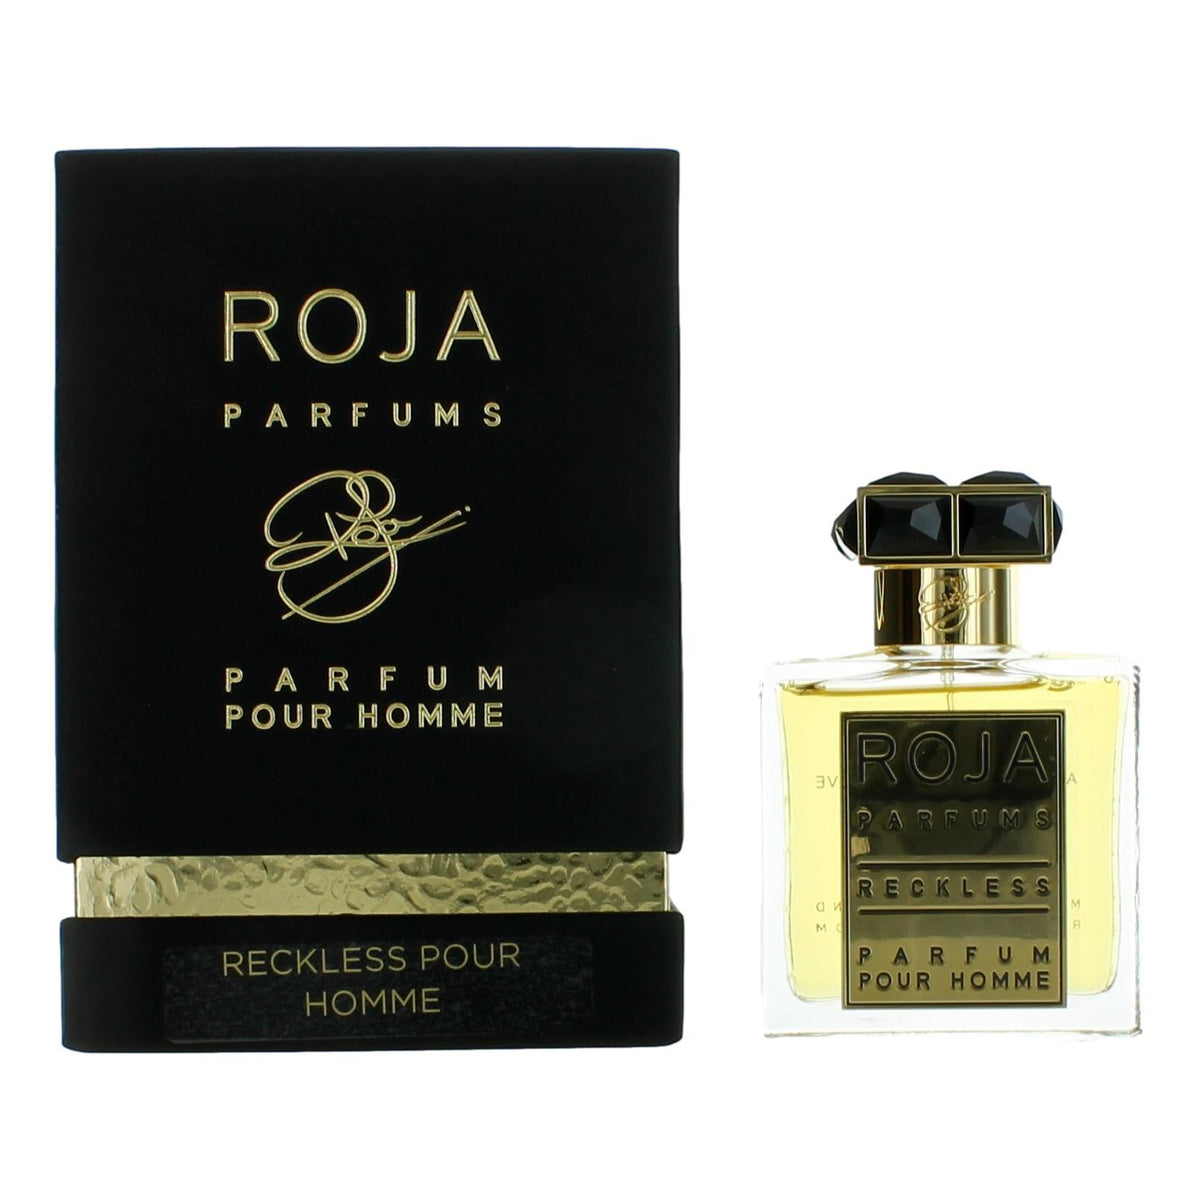 Reckless Pour Homme by Roja Parfums,1.7 oz Parfum Spray for Men